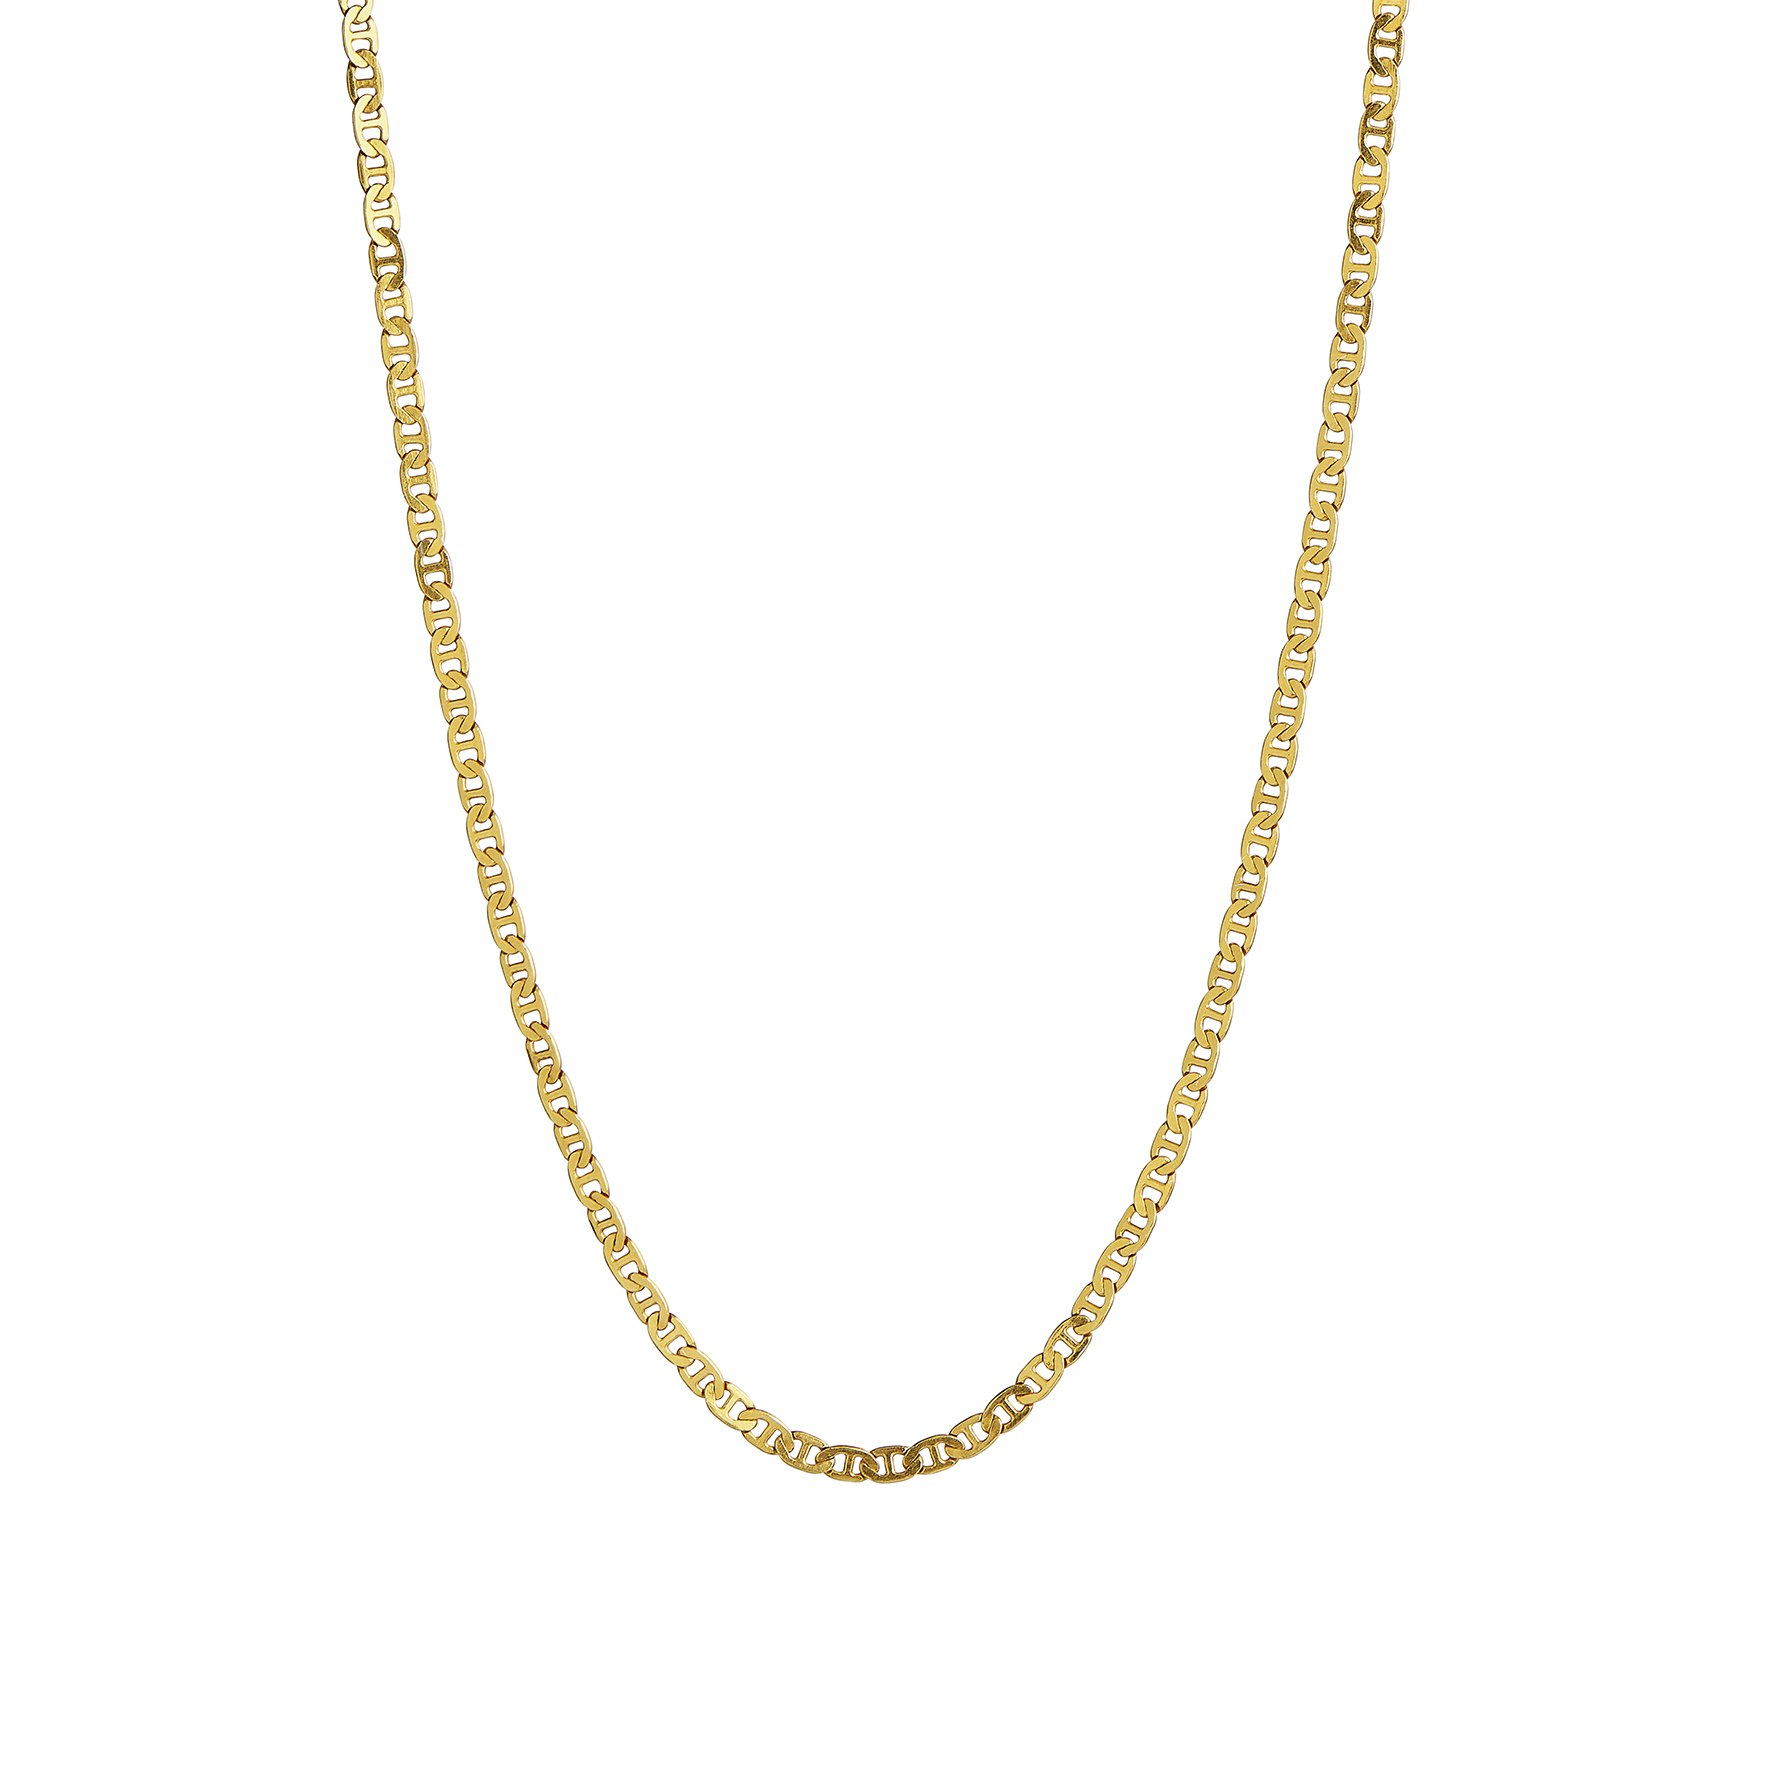 Petit Link Pendant Chain från STINE A Jewelry i Förgyllt-Silver Sterling 925